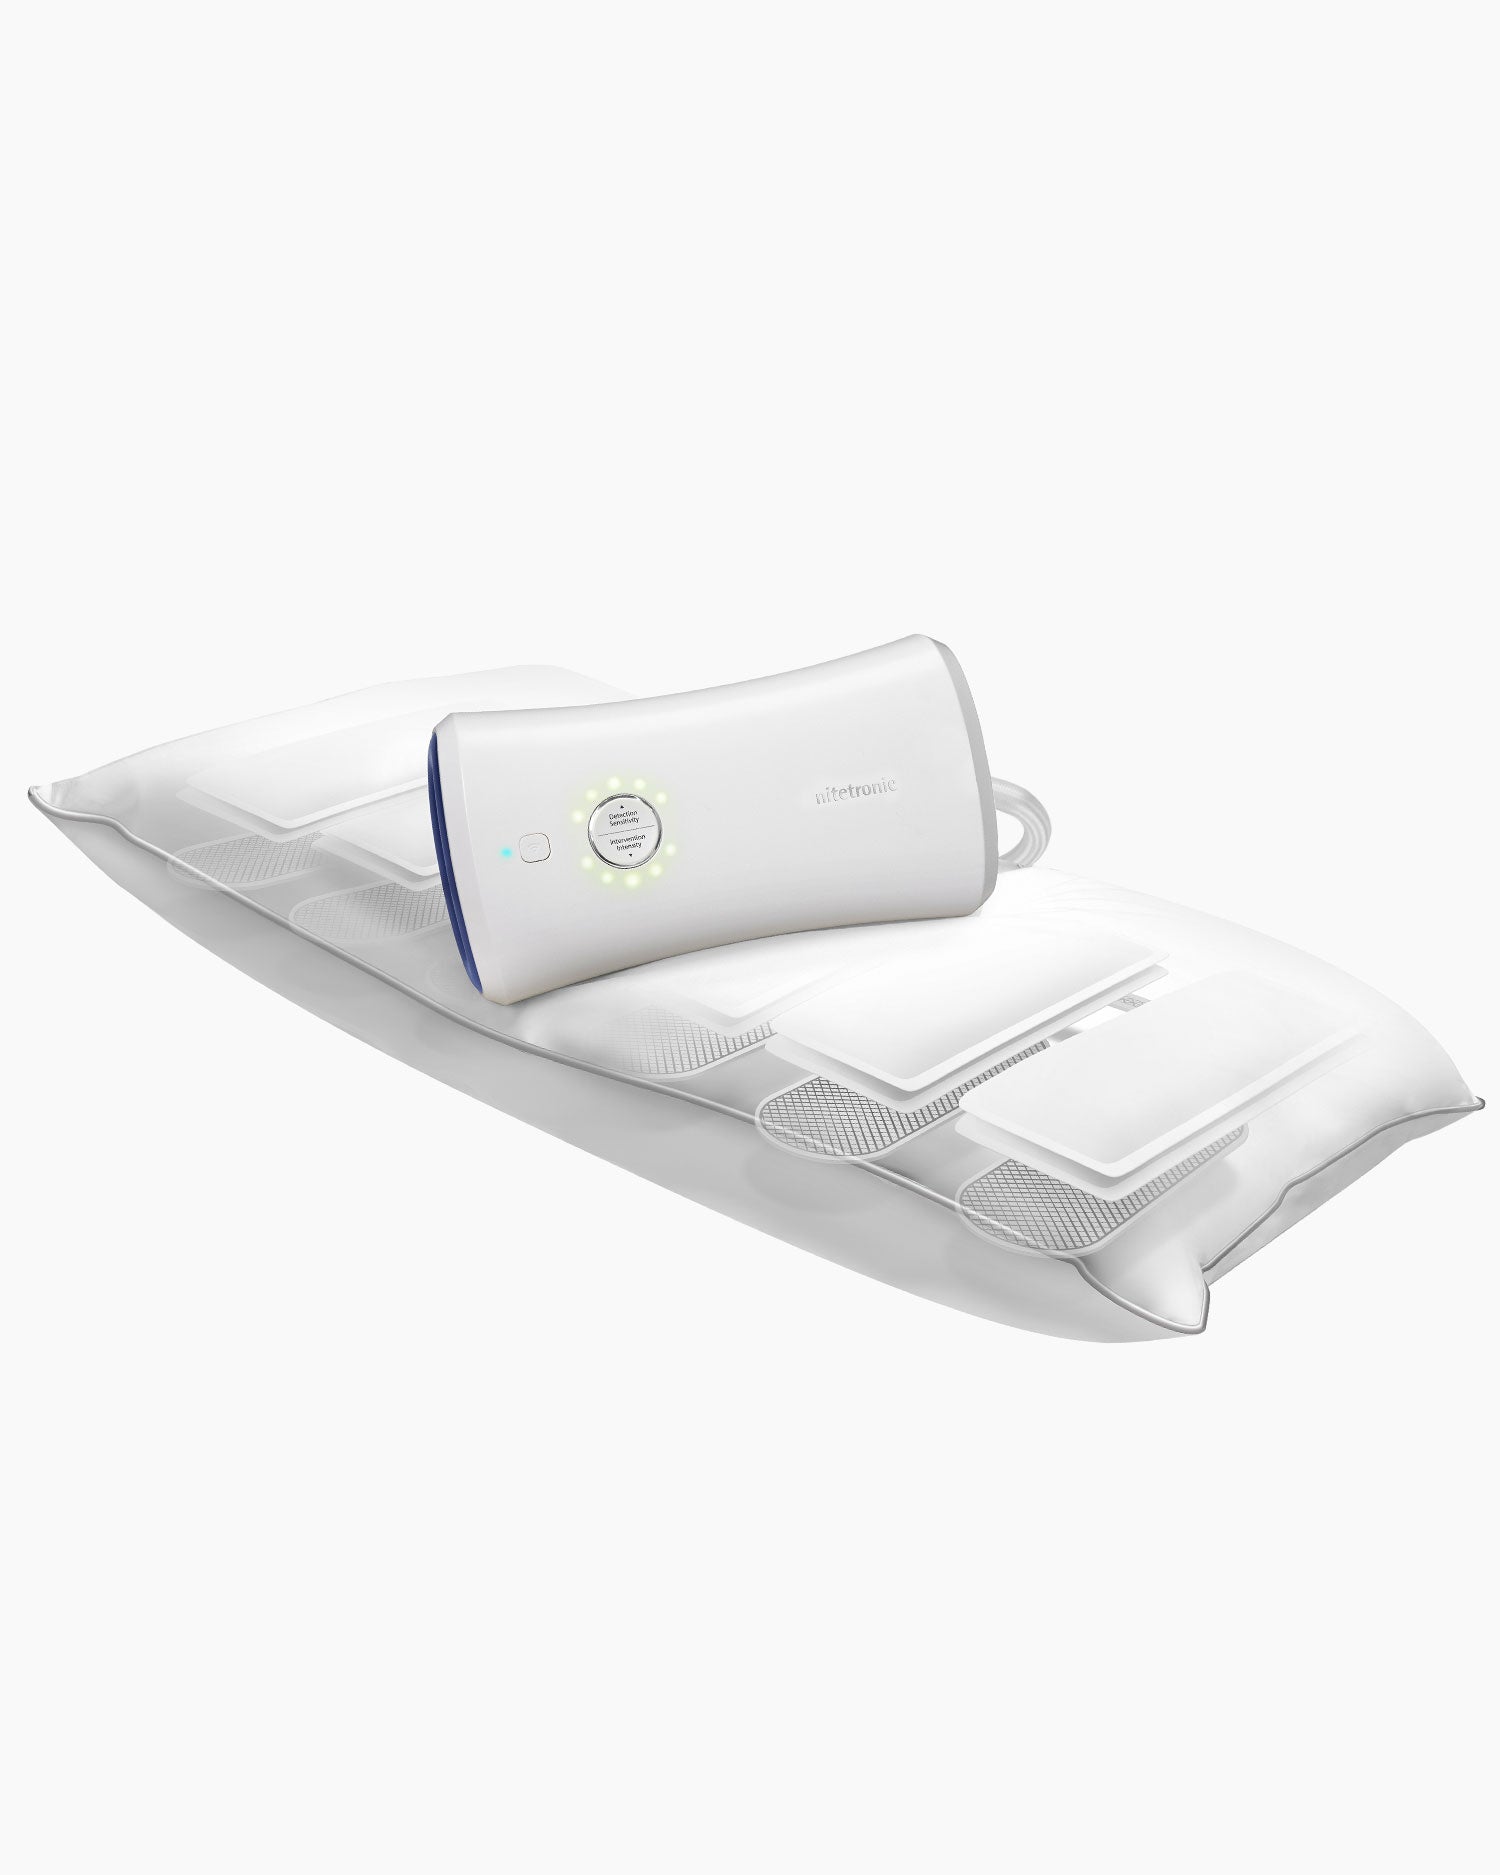 Nitetronic Z6 Anti Snore Pillow Slide Image 2